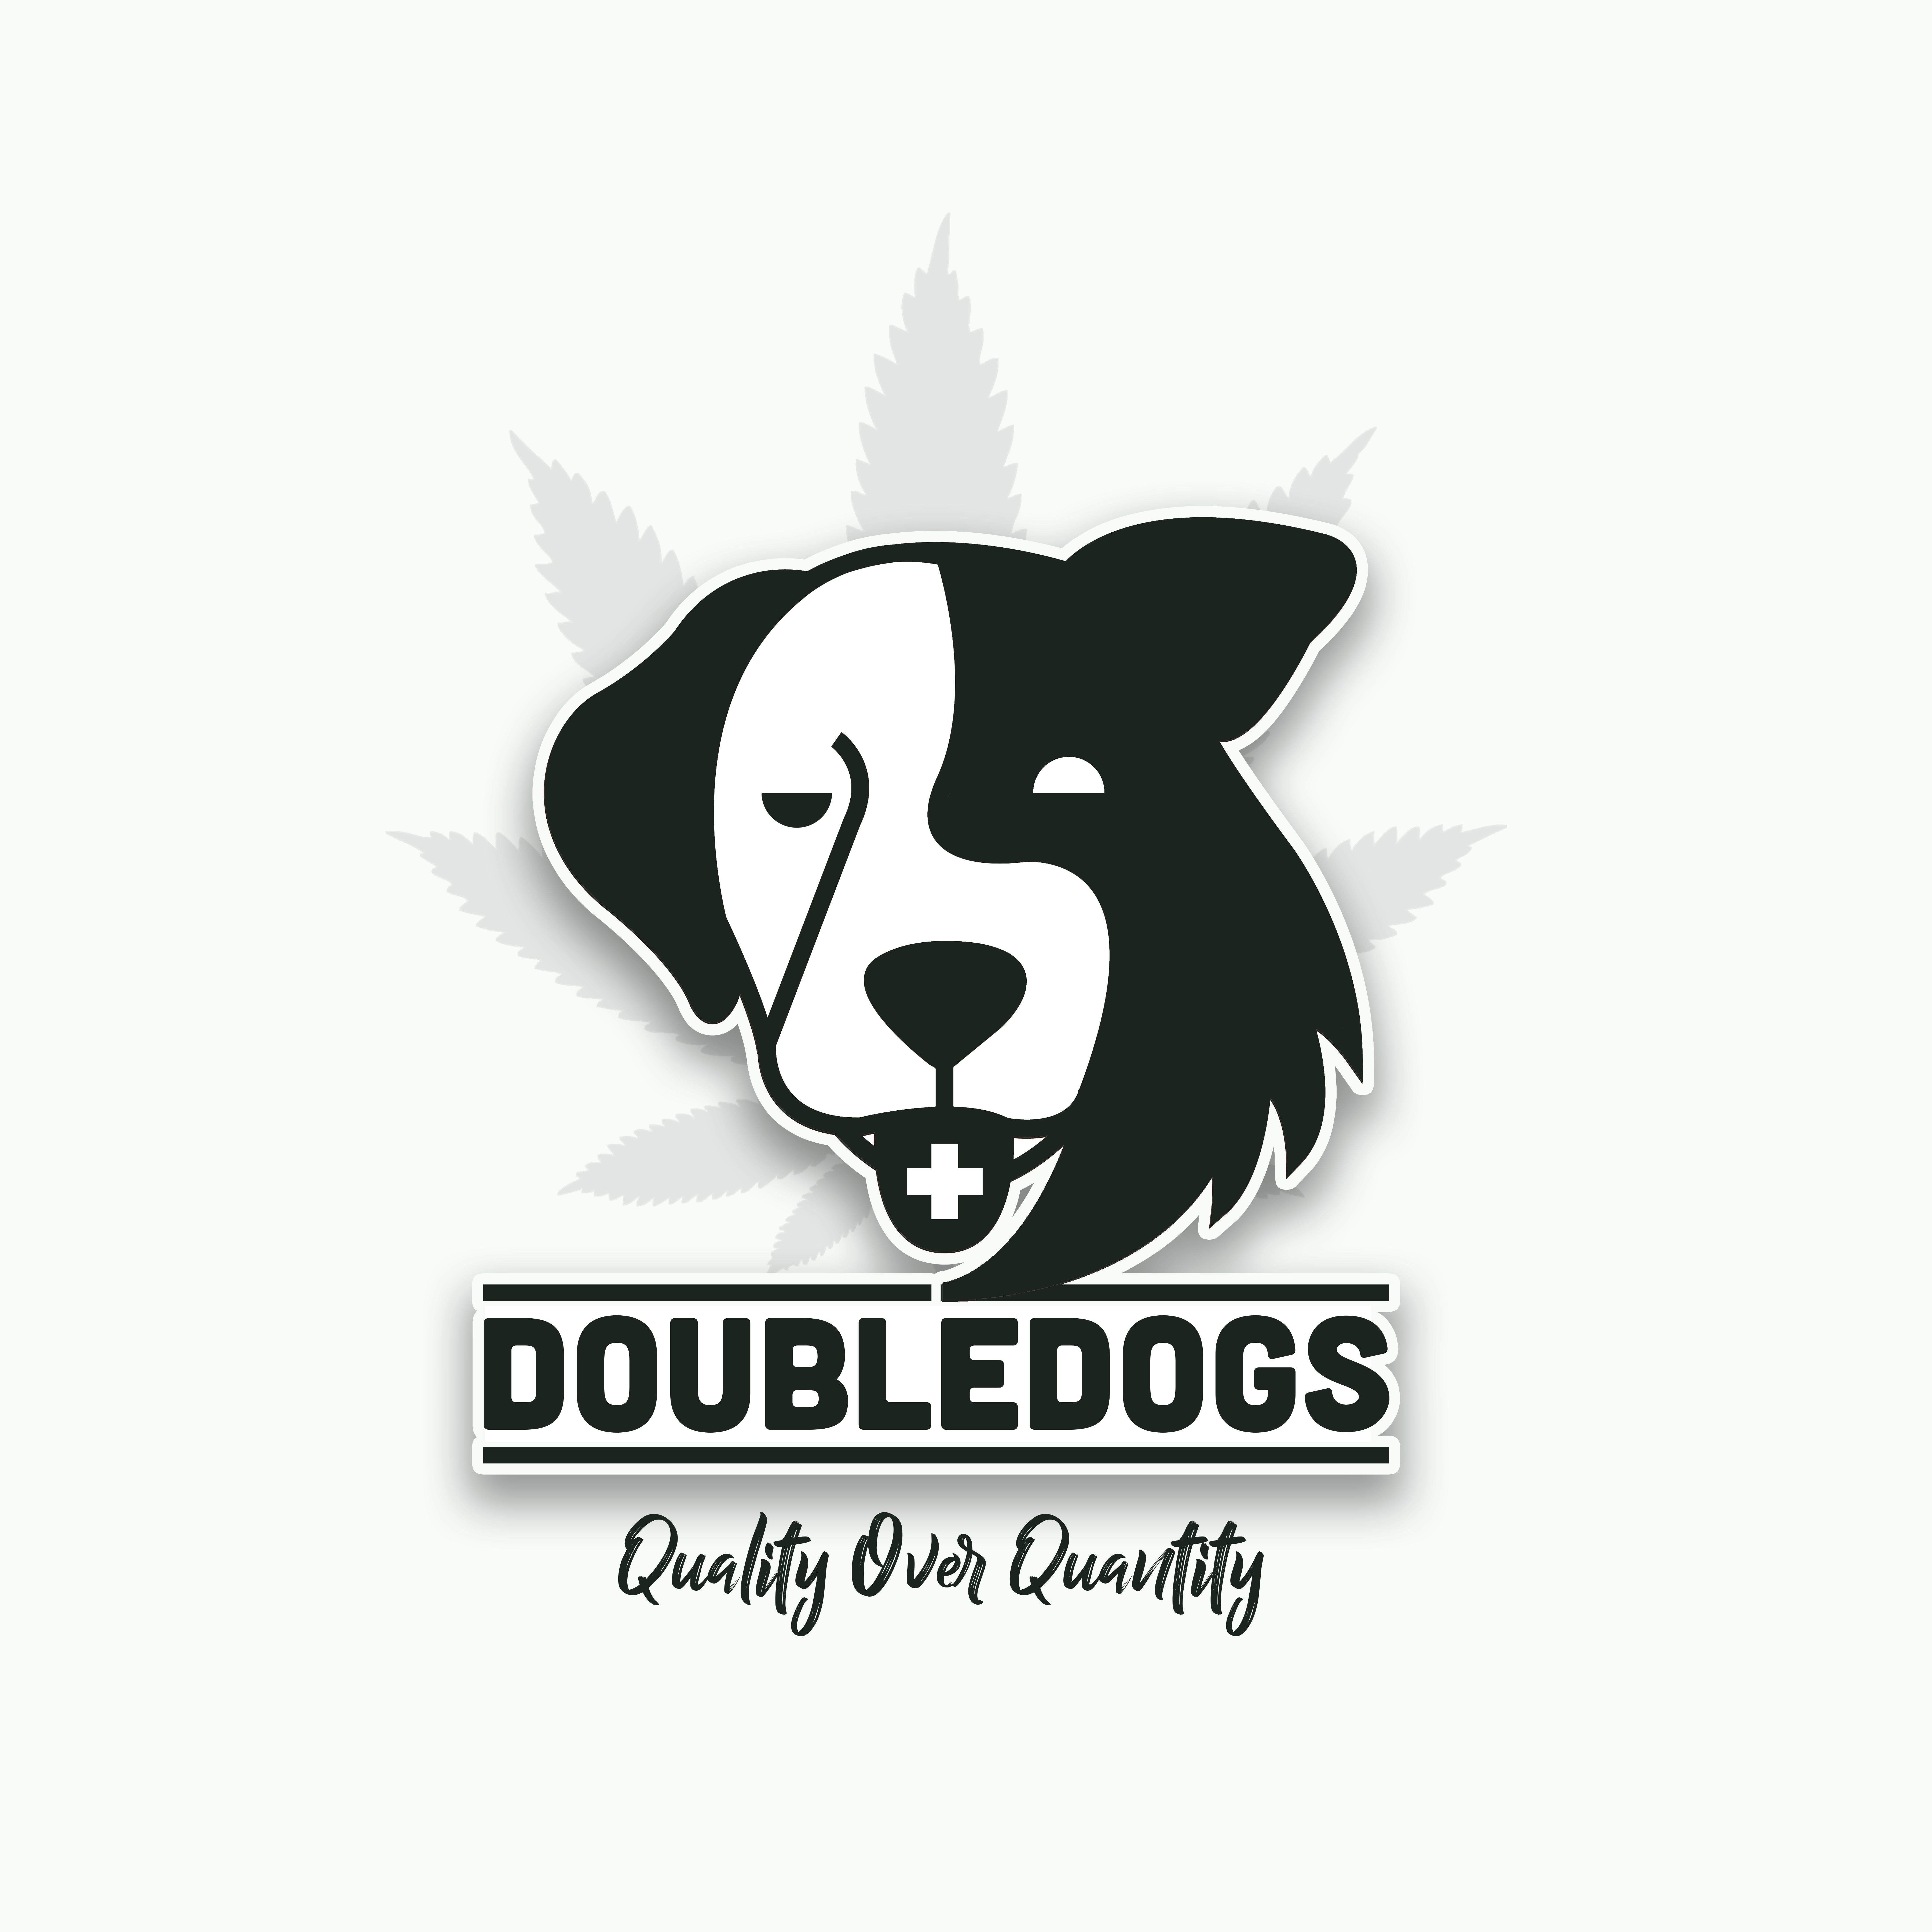 Double Dogs Cannabis - Medical Marijuana Doctors - Cannabizme.com